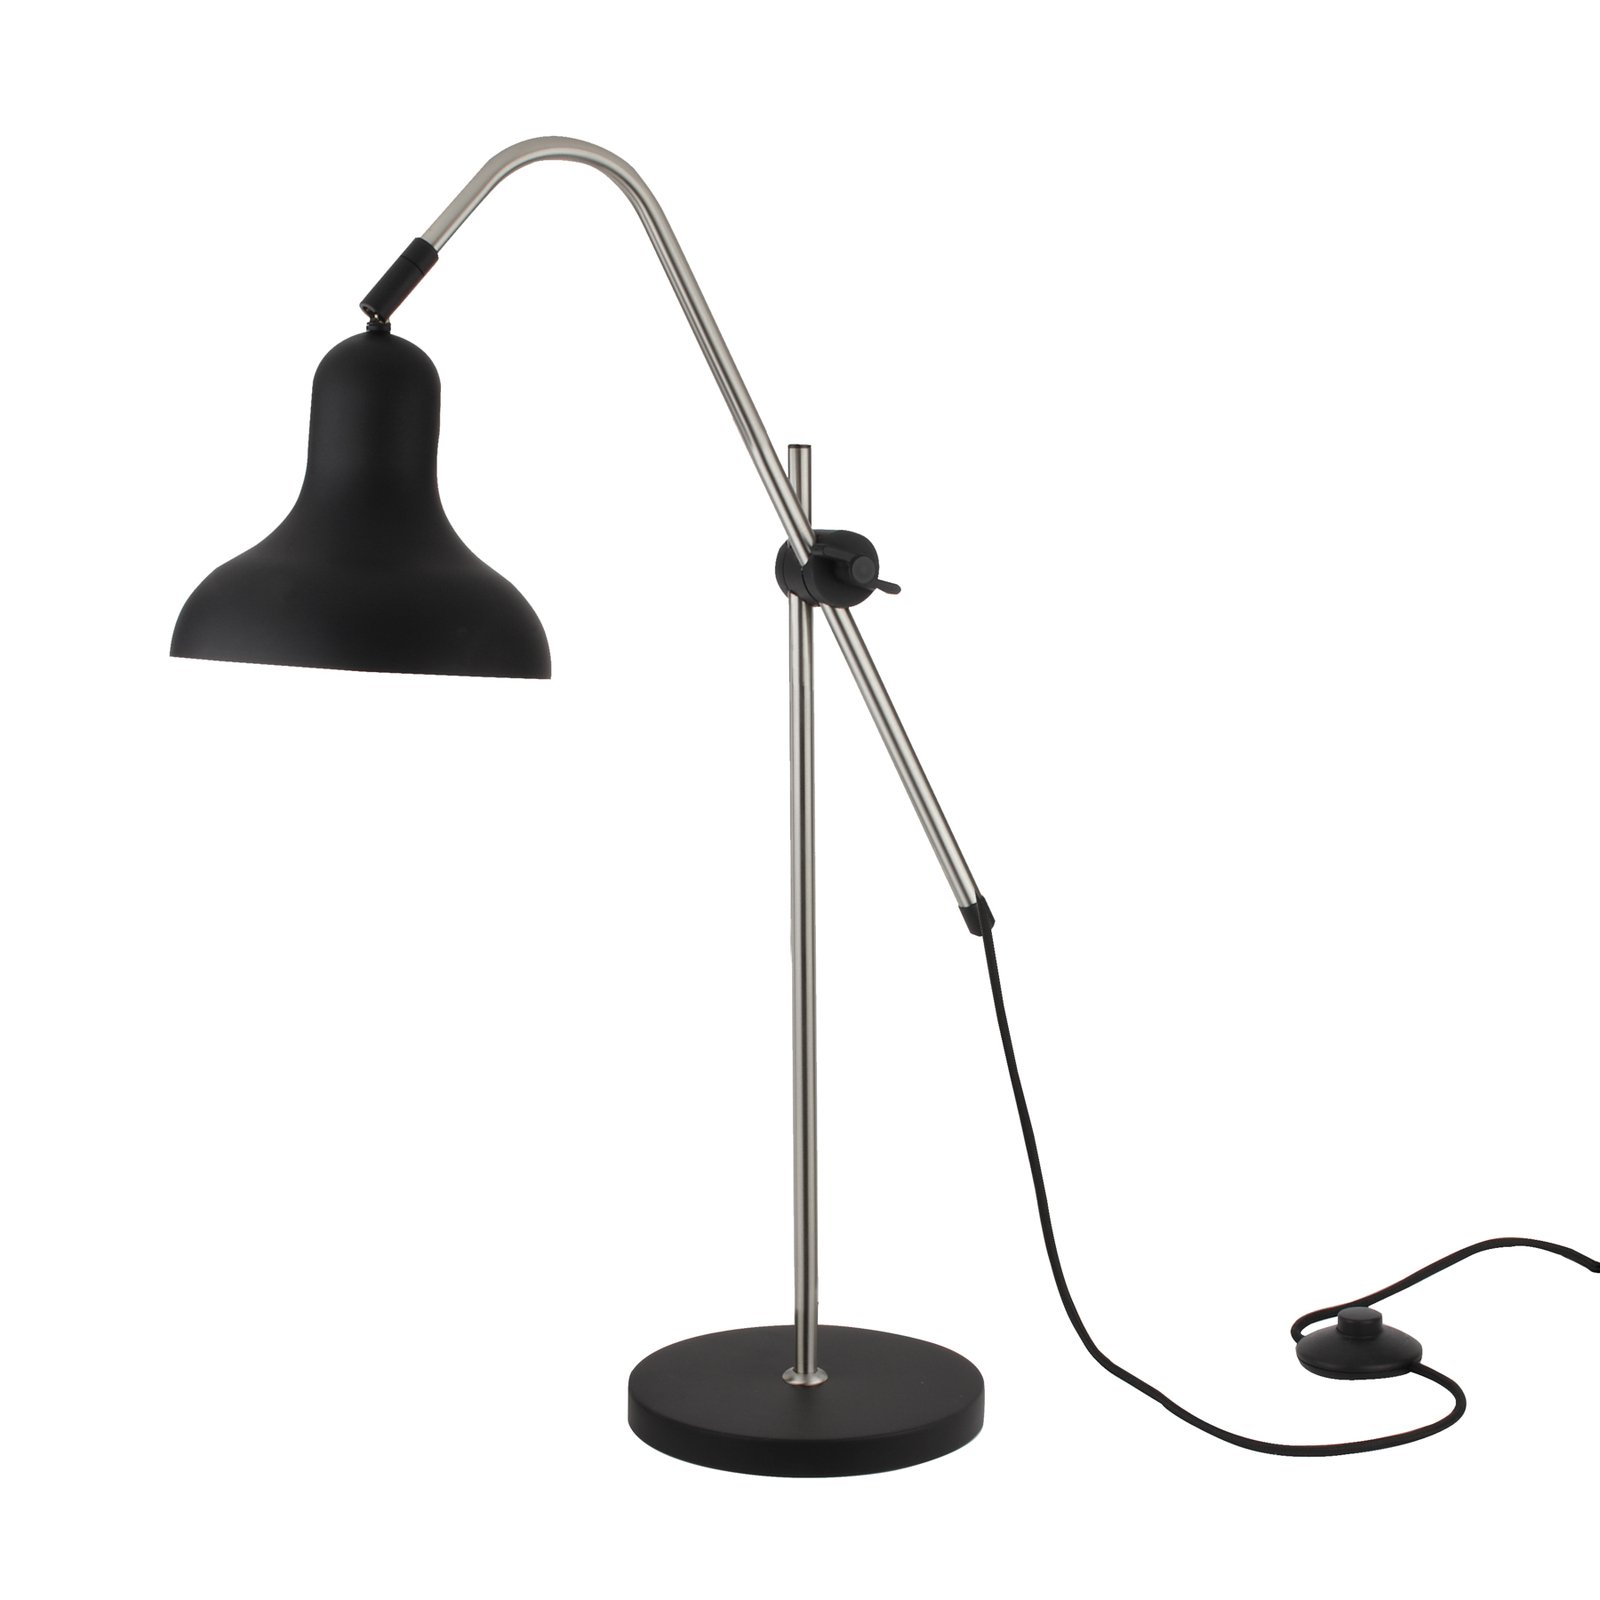 Winston bordlampe, justerbar, sort/hvid